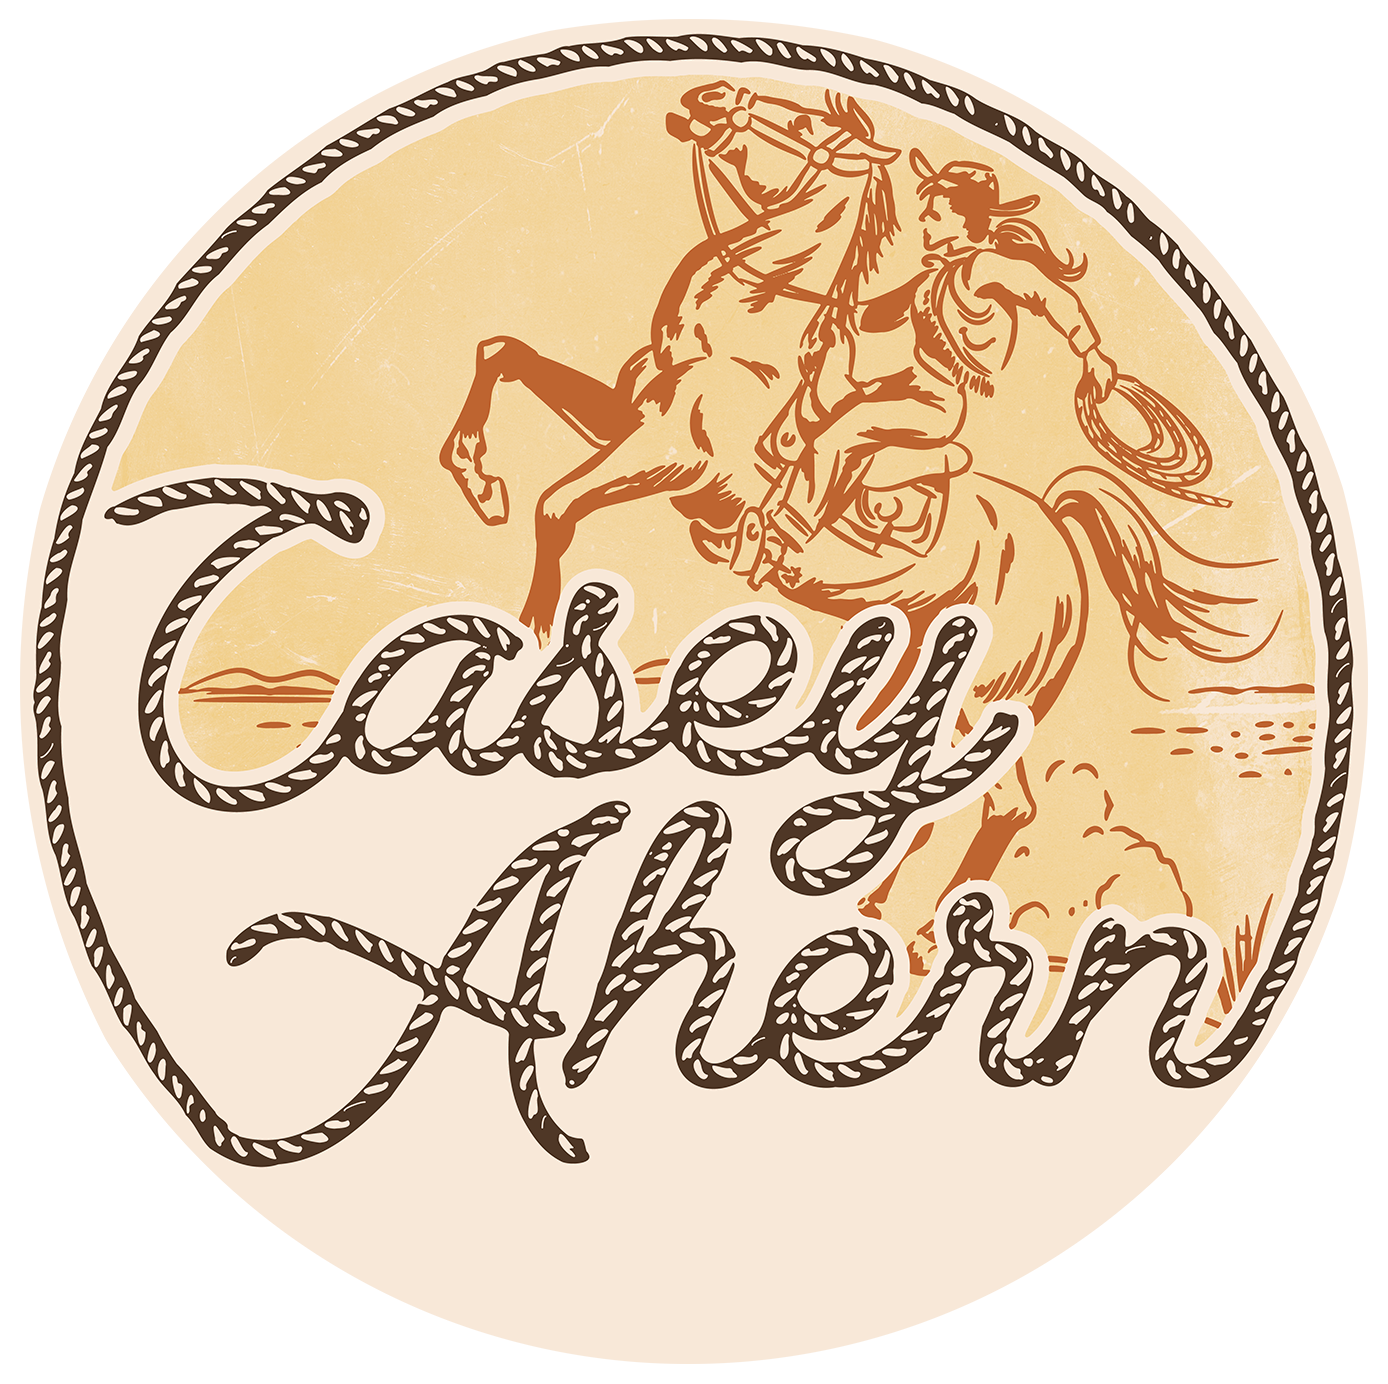 CASEY AHERN